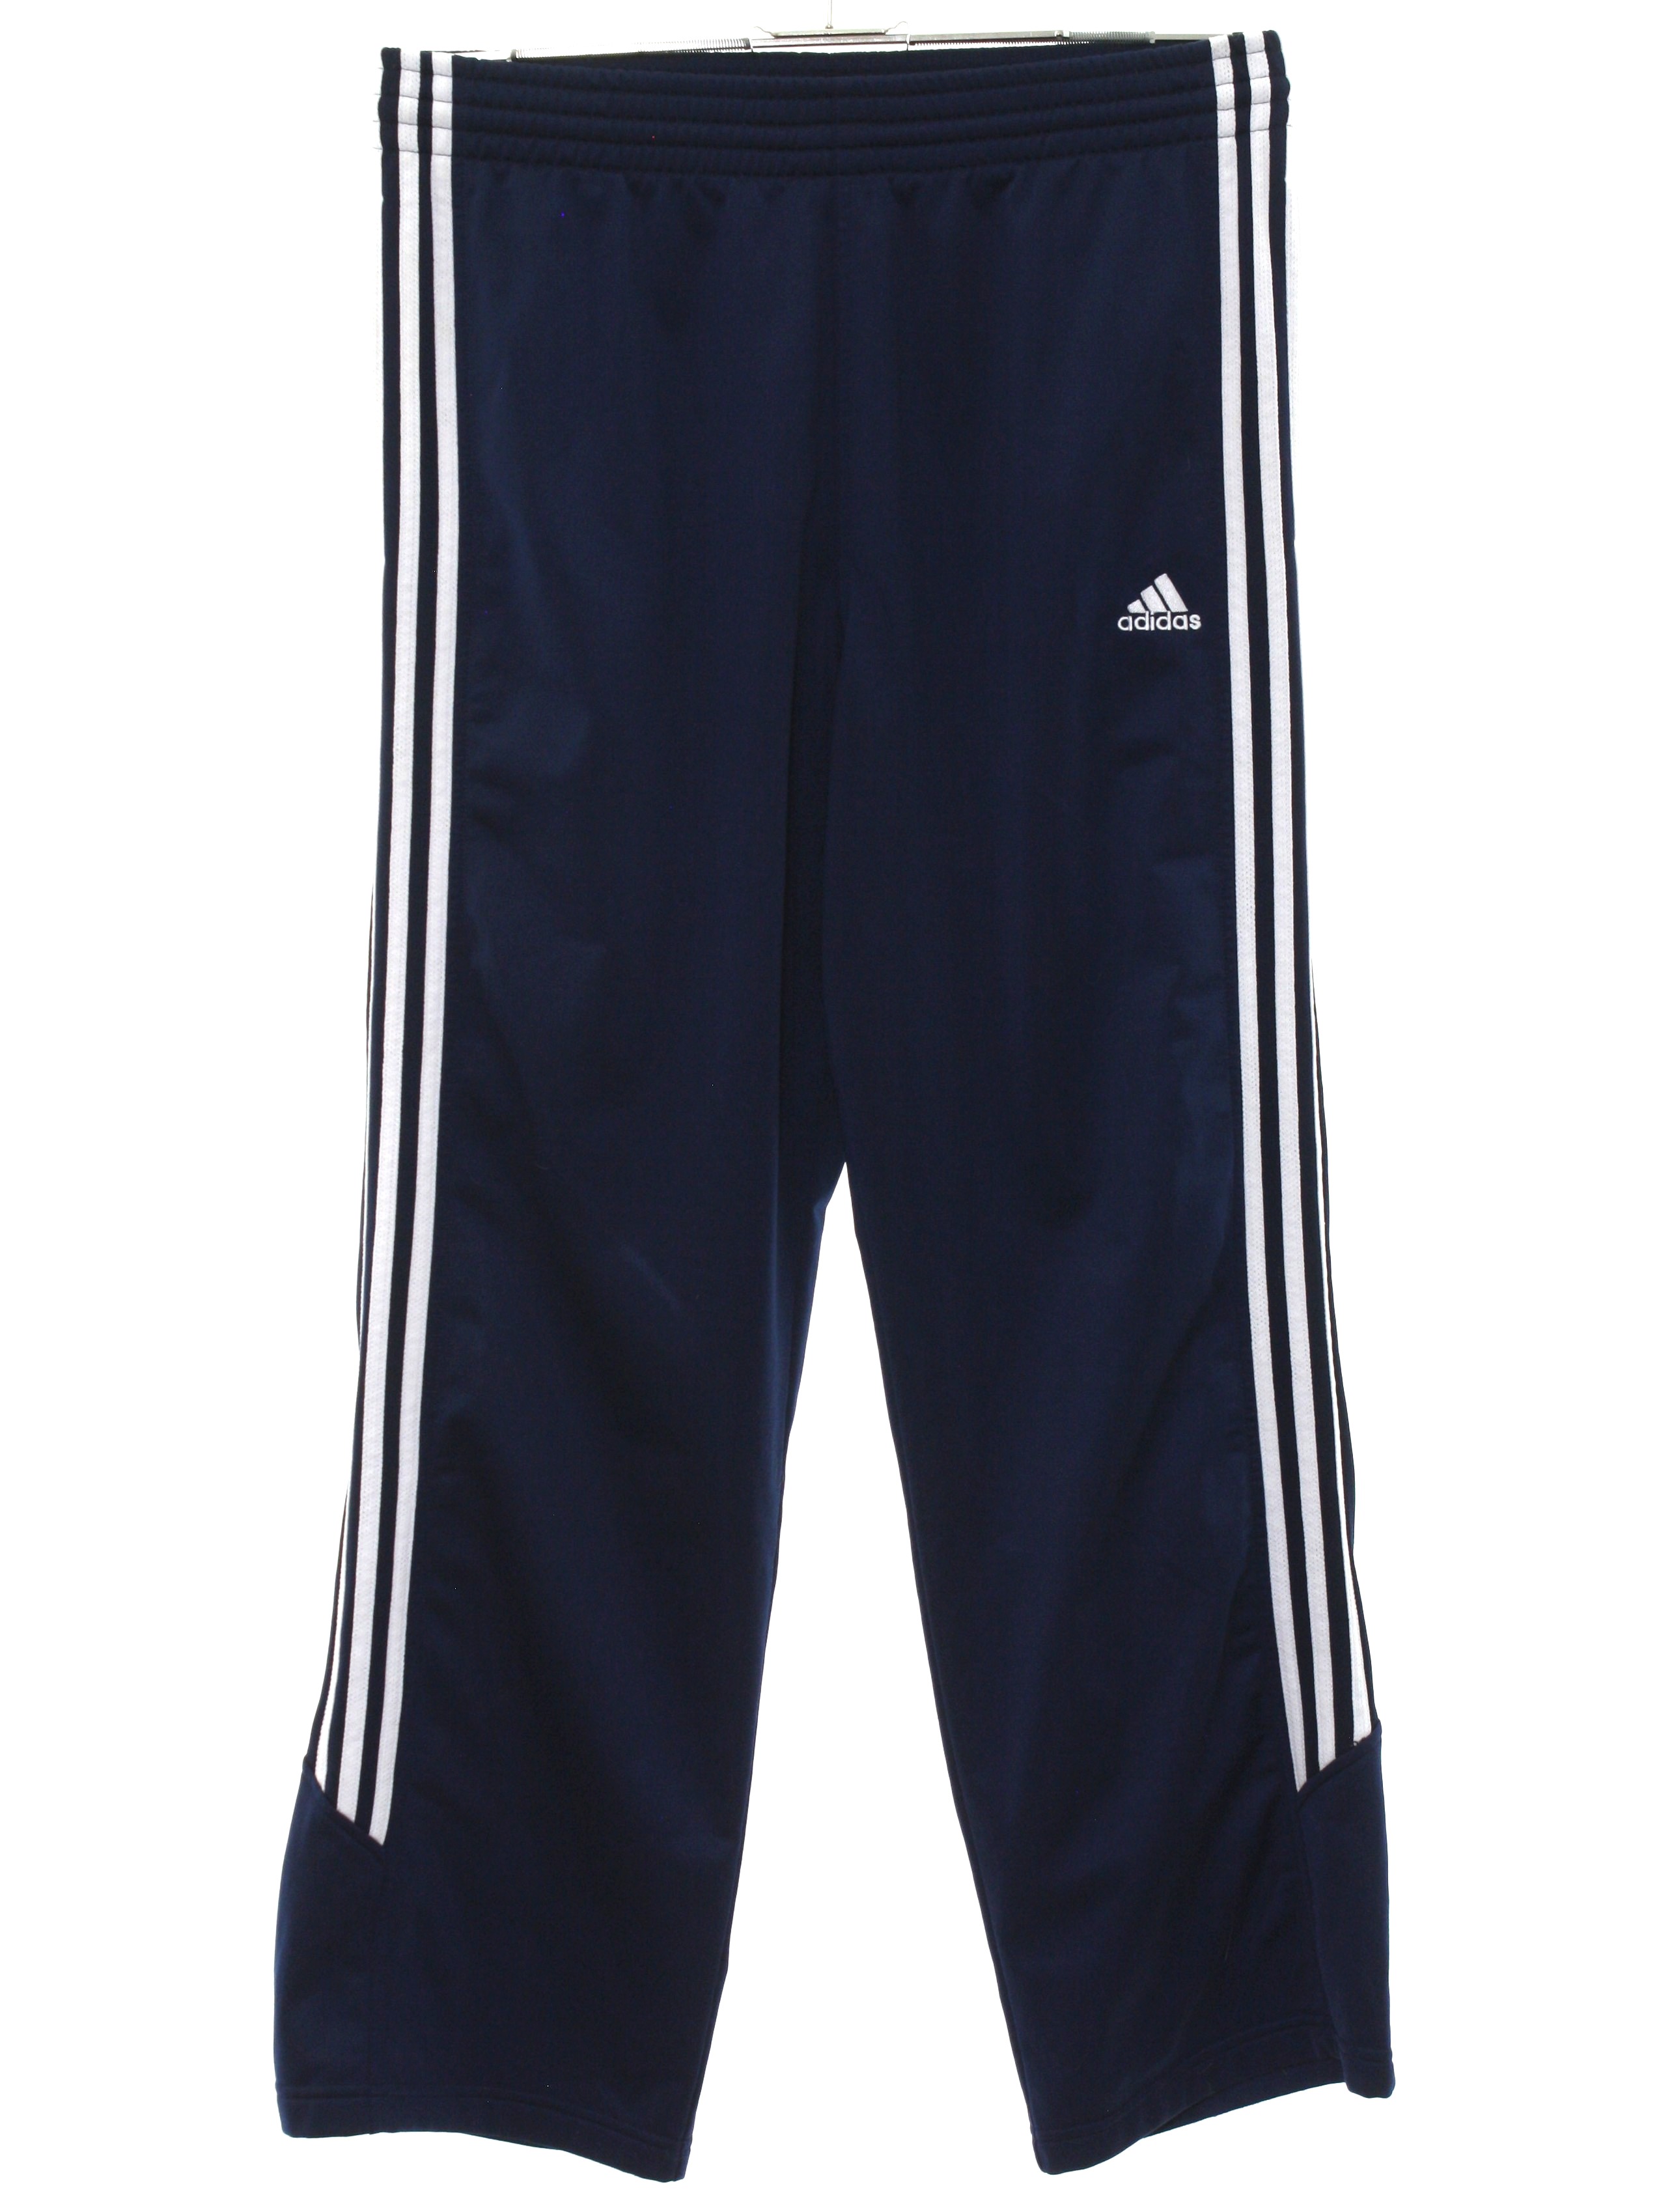 Pants: 90s -Adidas- Mens dark blue background polyester Straight leg, baggy  track pants with single snap plain cuff hem. No pockets, elastic waistline,  inside drawstrings, no belt loops. Sides of legs have